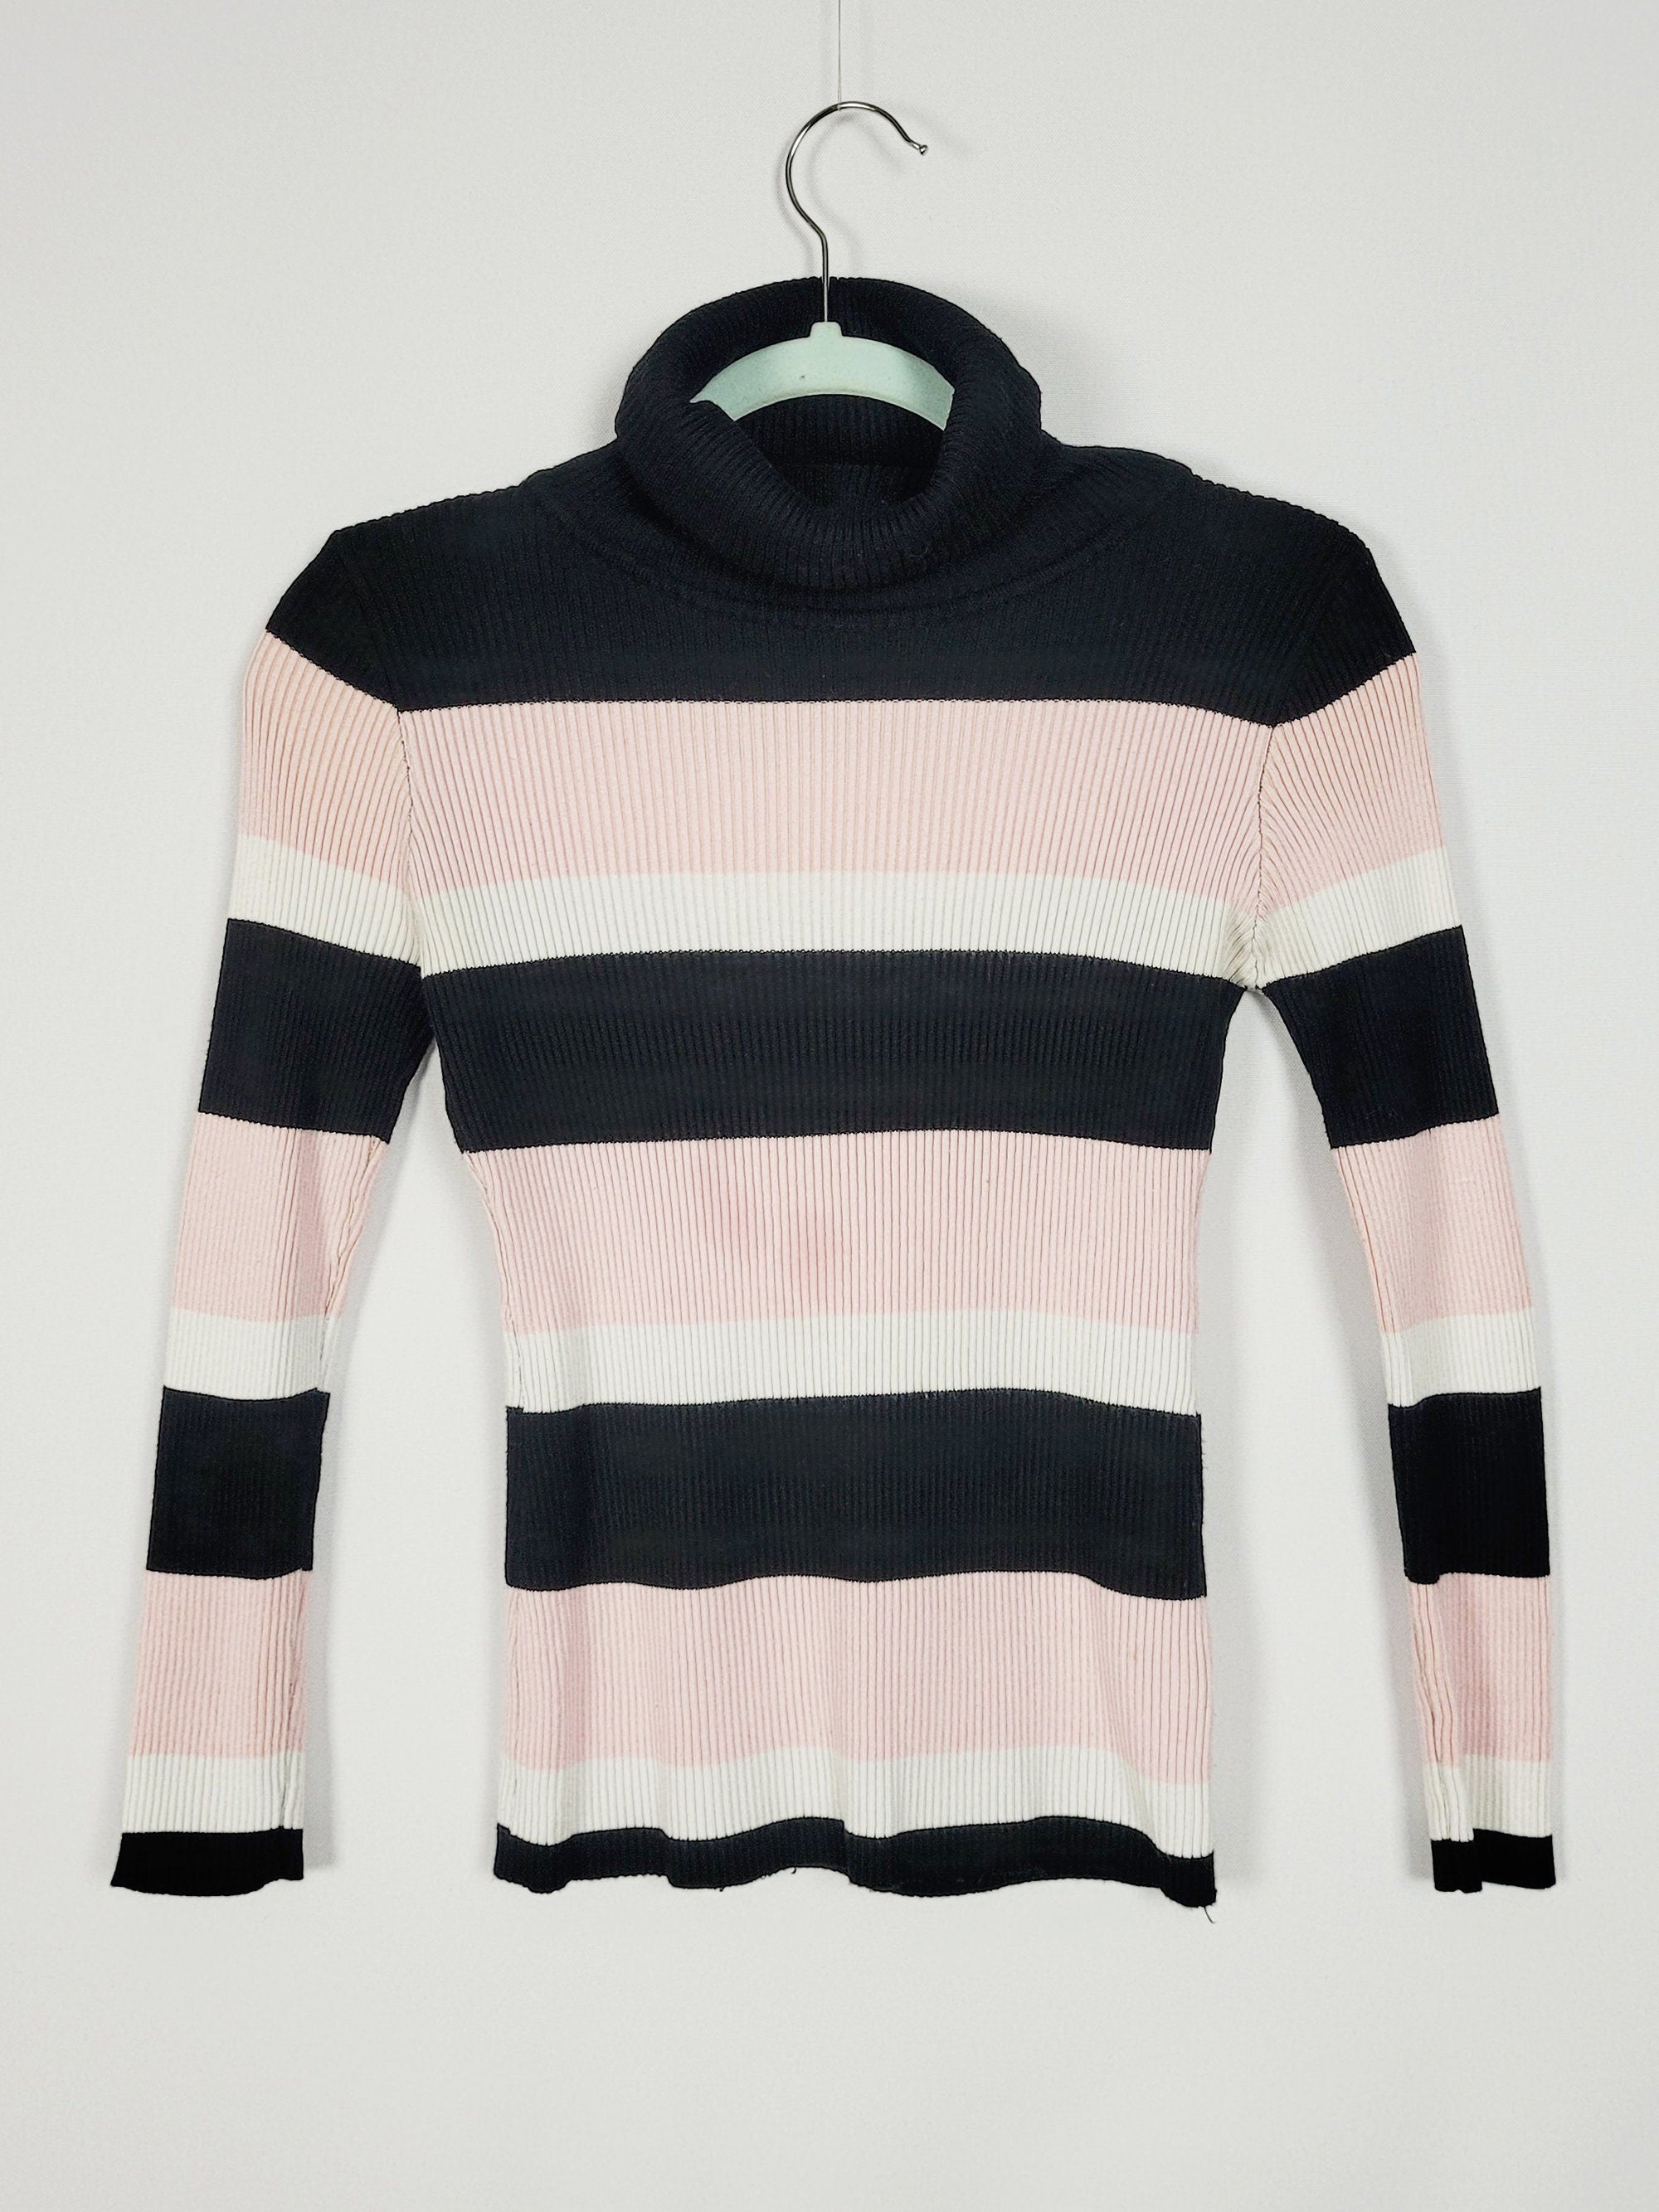 90s minimalist striped turtleneck grunge sweater top